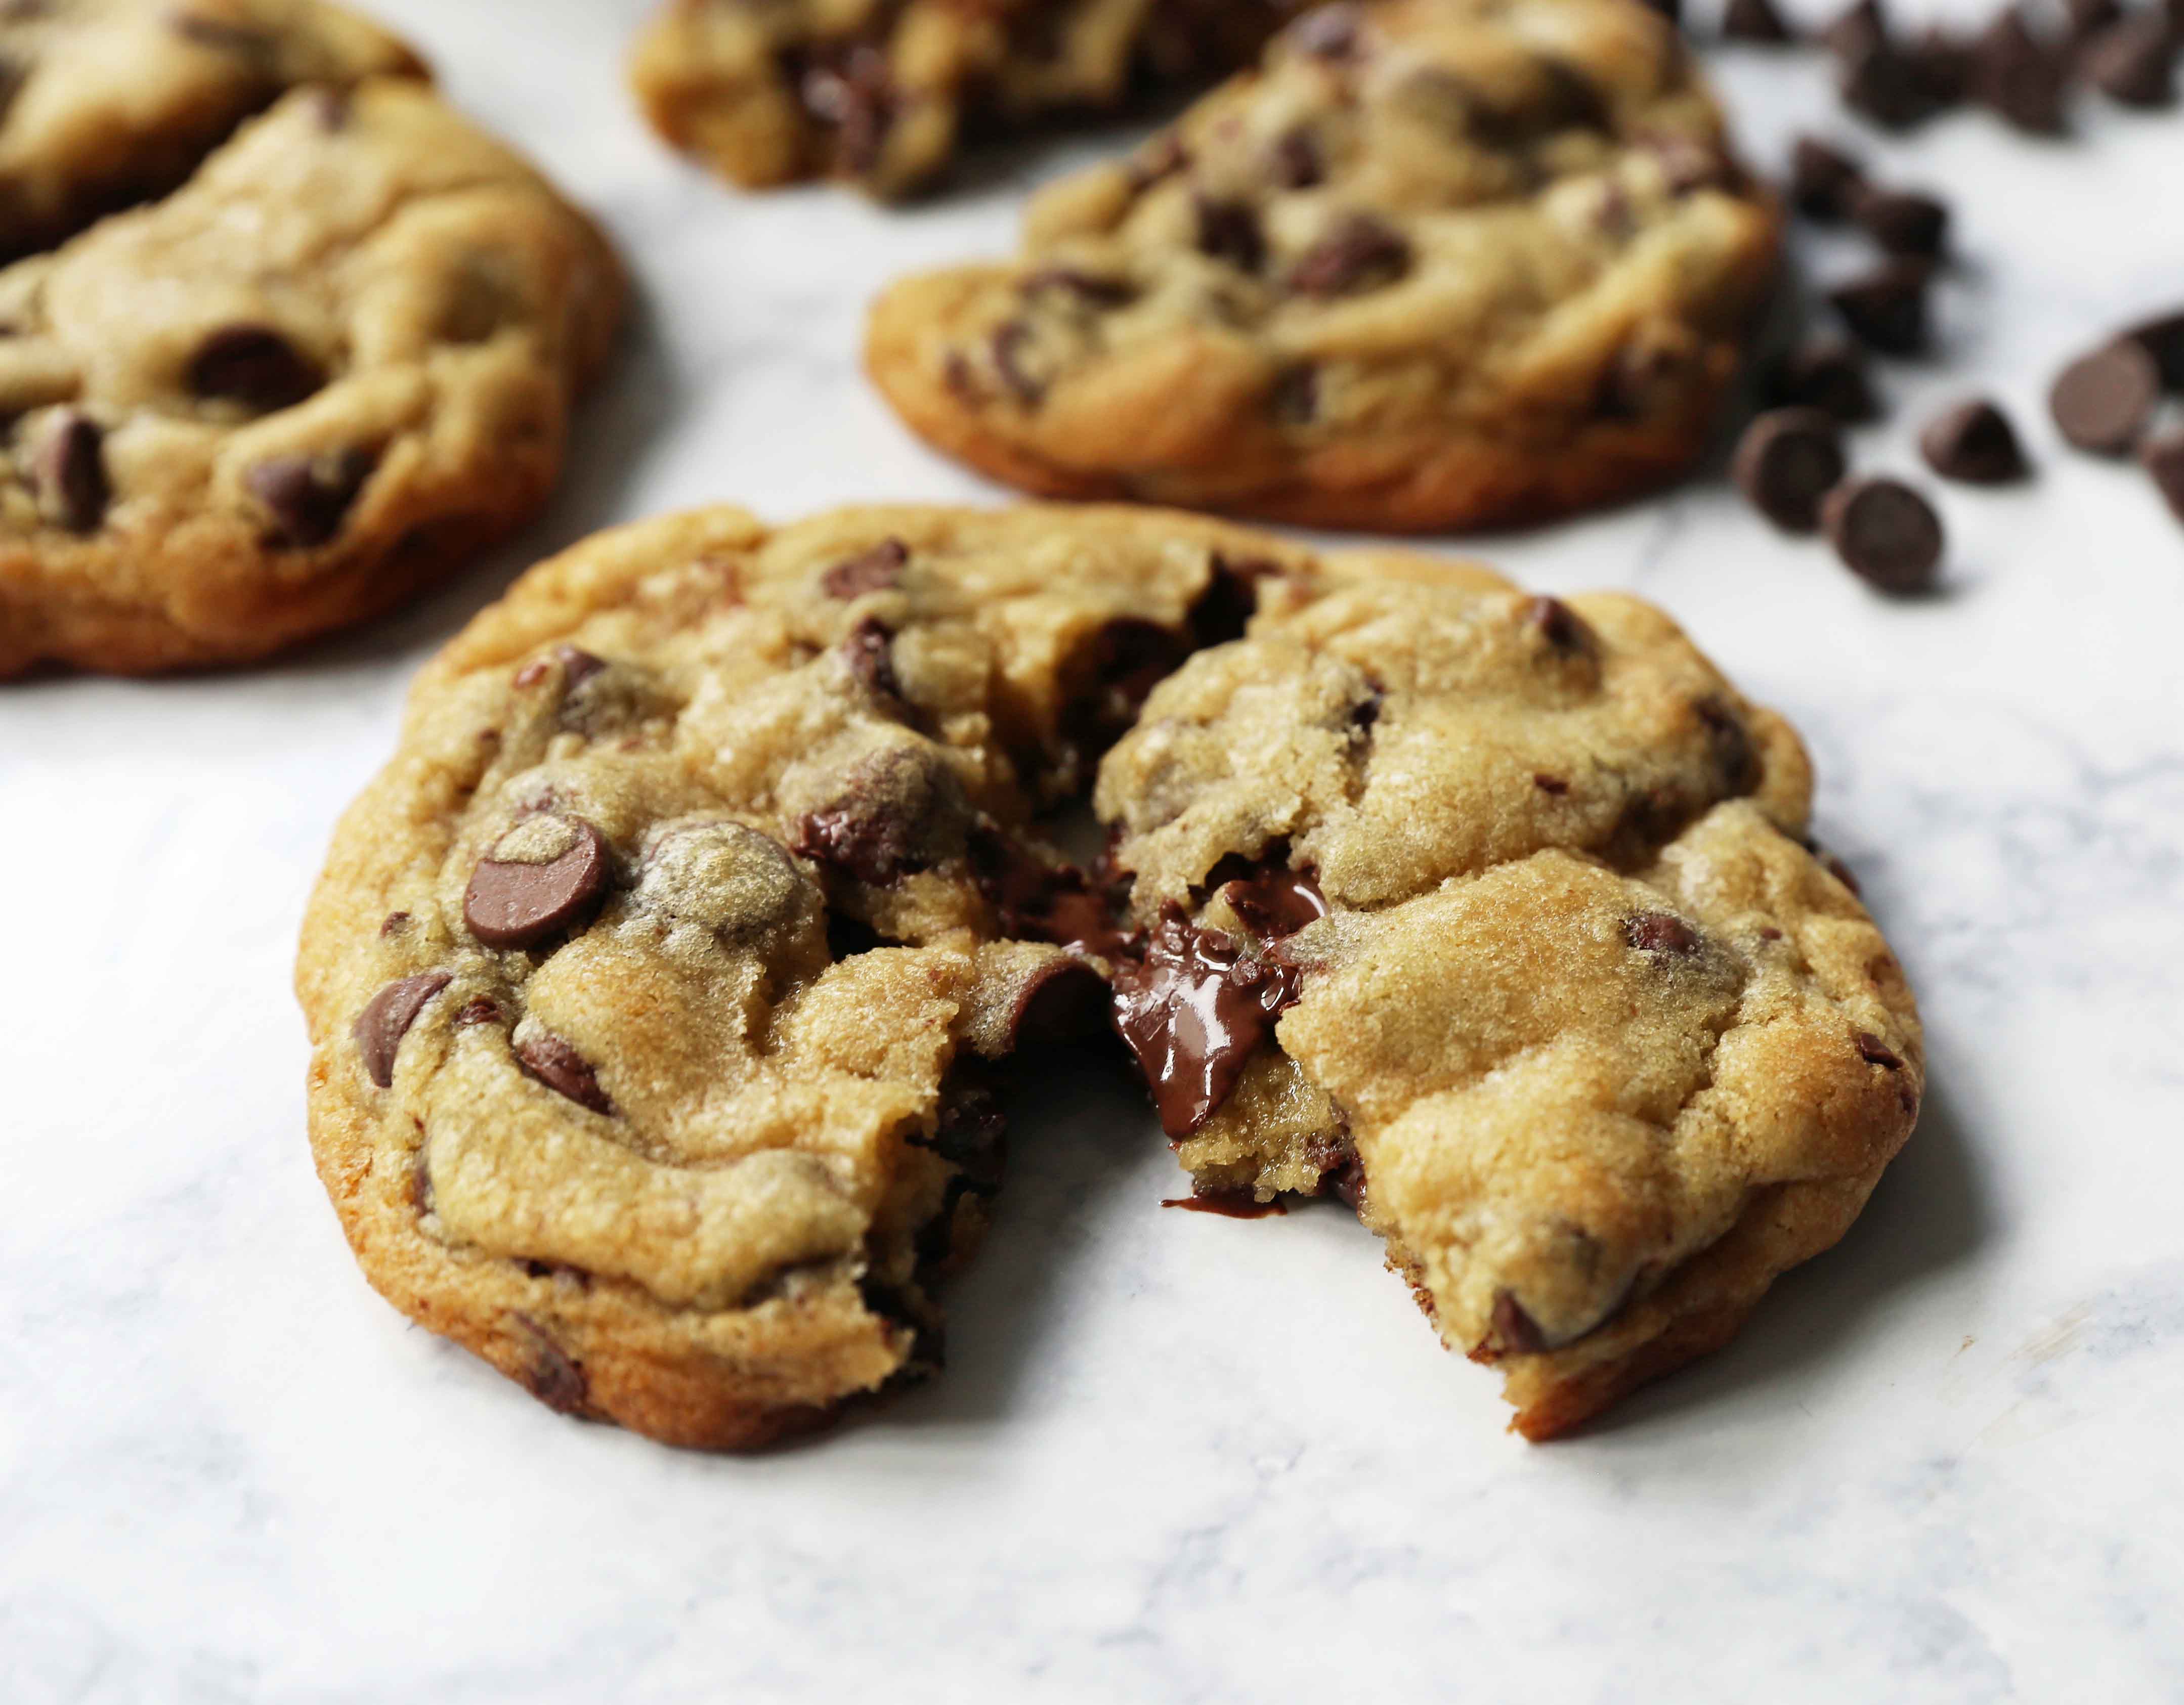 https://www.modernhoney.com/wp-content/uploads/2019/01/The-Best-Chocolate-Chip-Cookies-2.jpg